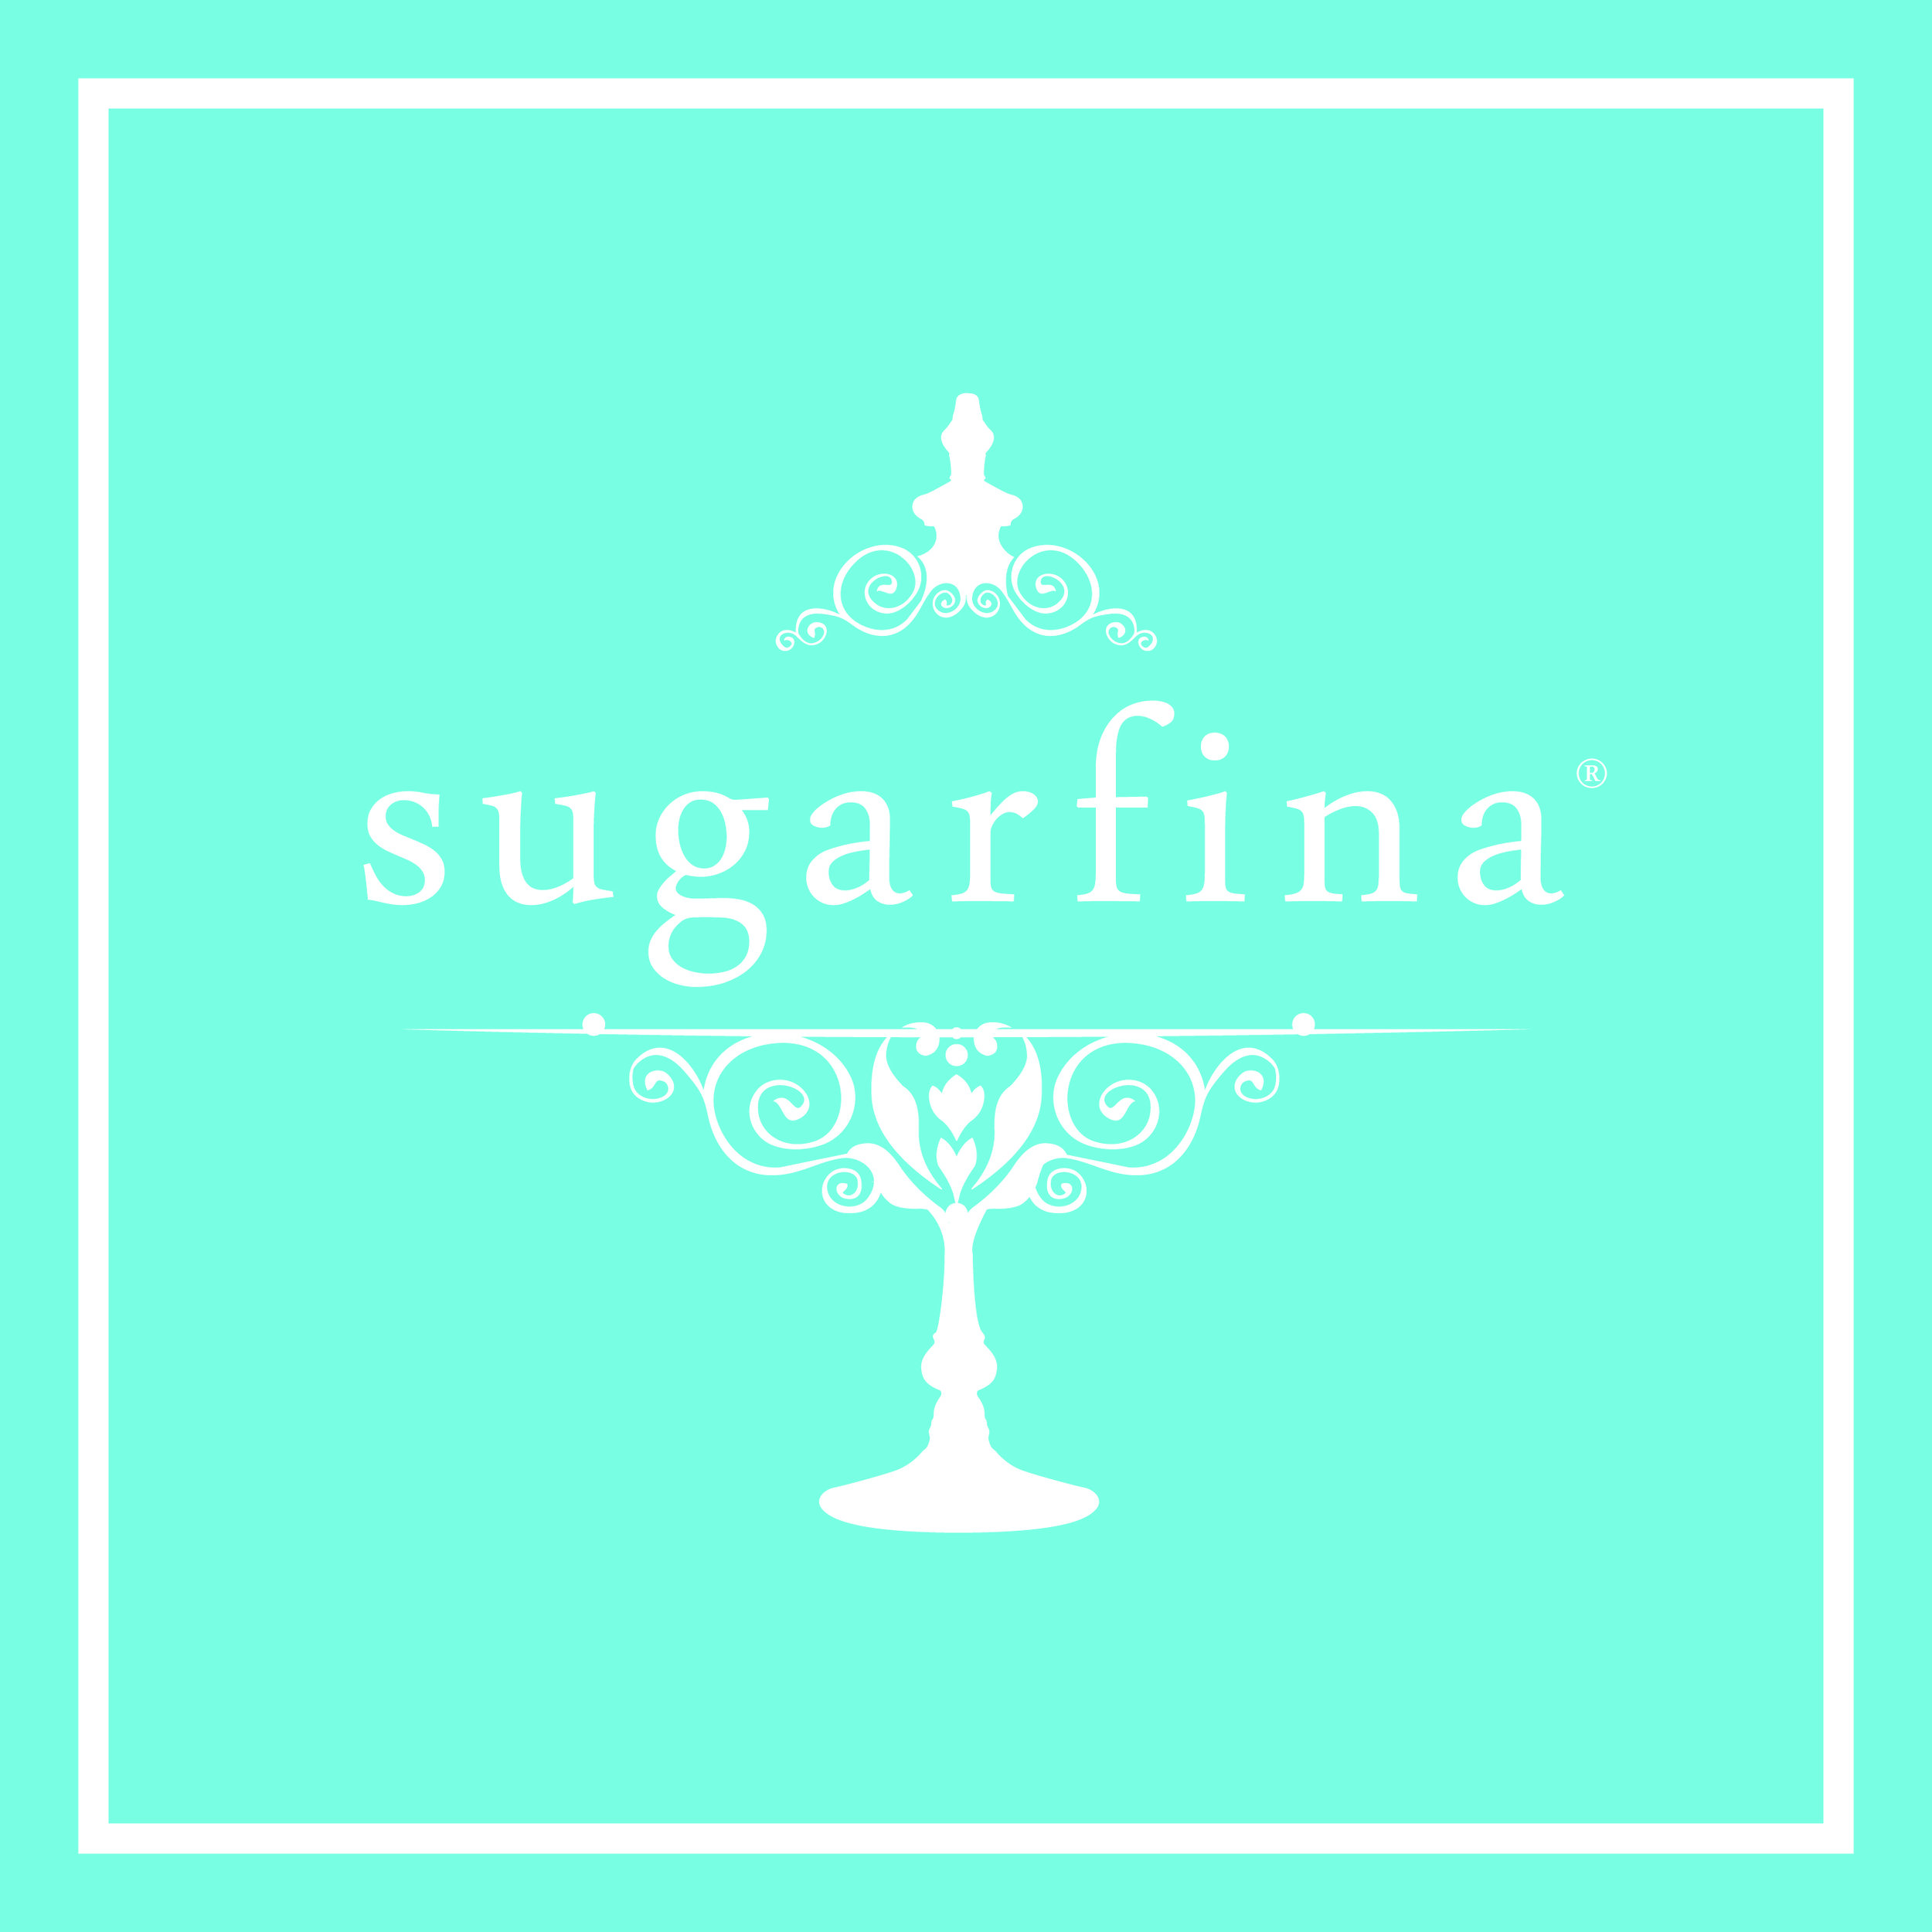 Sugarfina_square logo (1).jpg